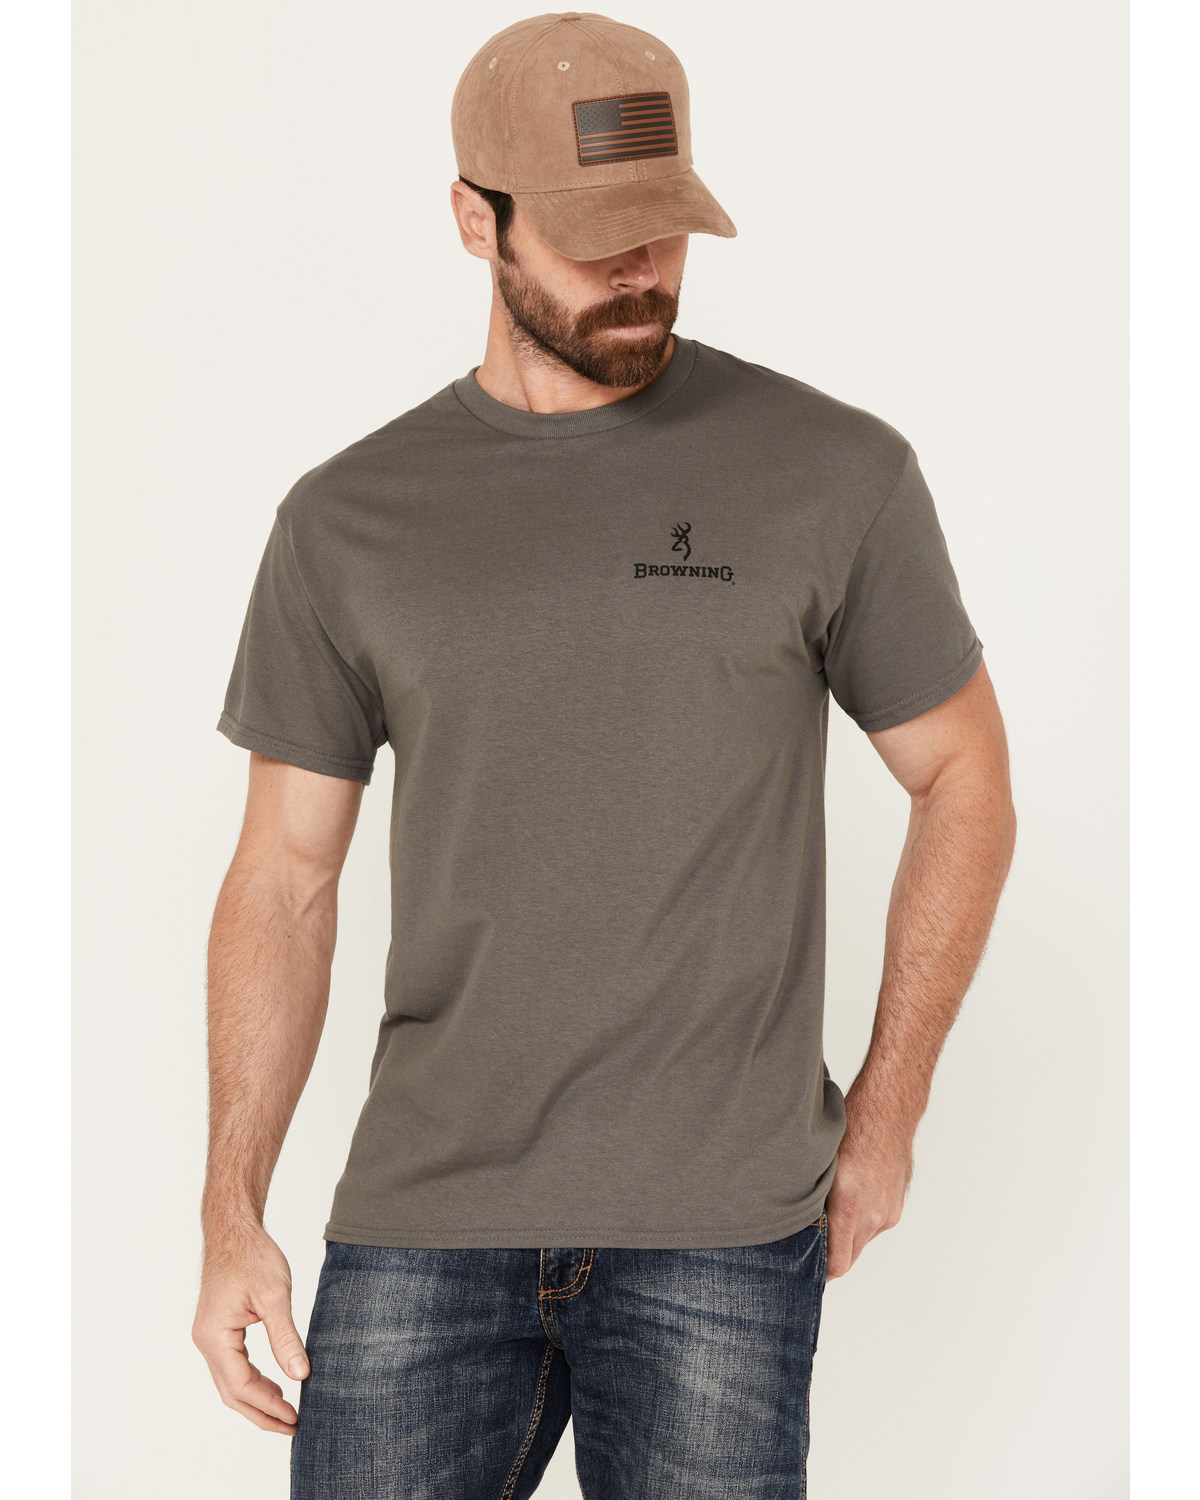 Browning Men's Hunters Flag Short Sleeve T-Shirt